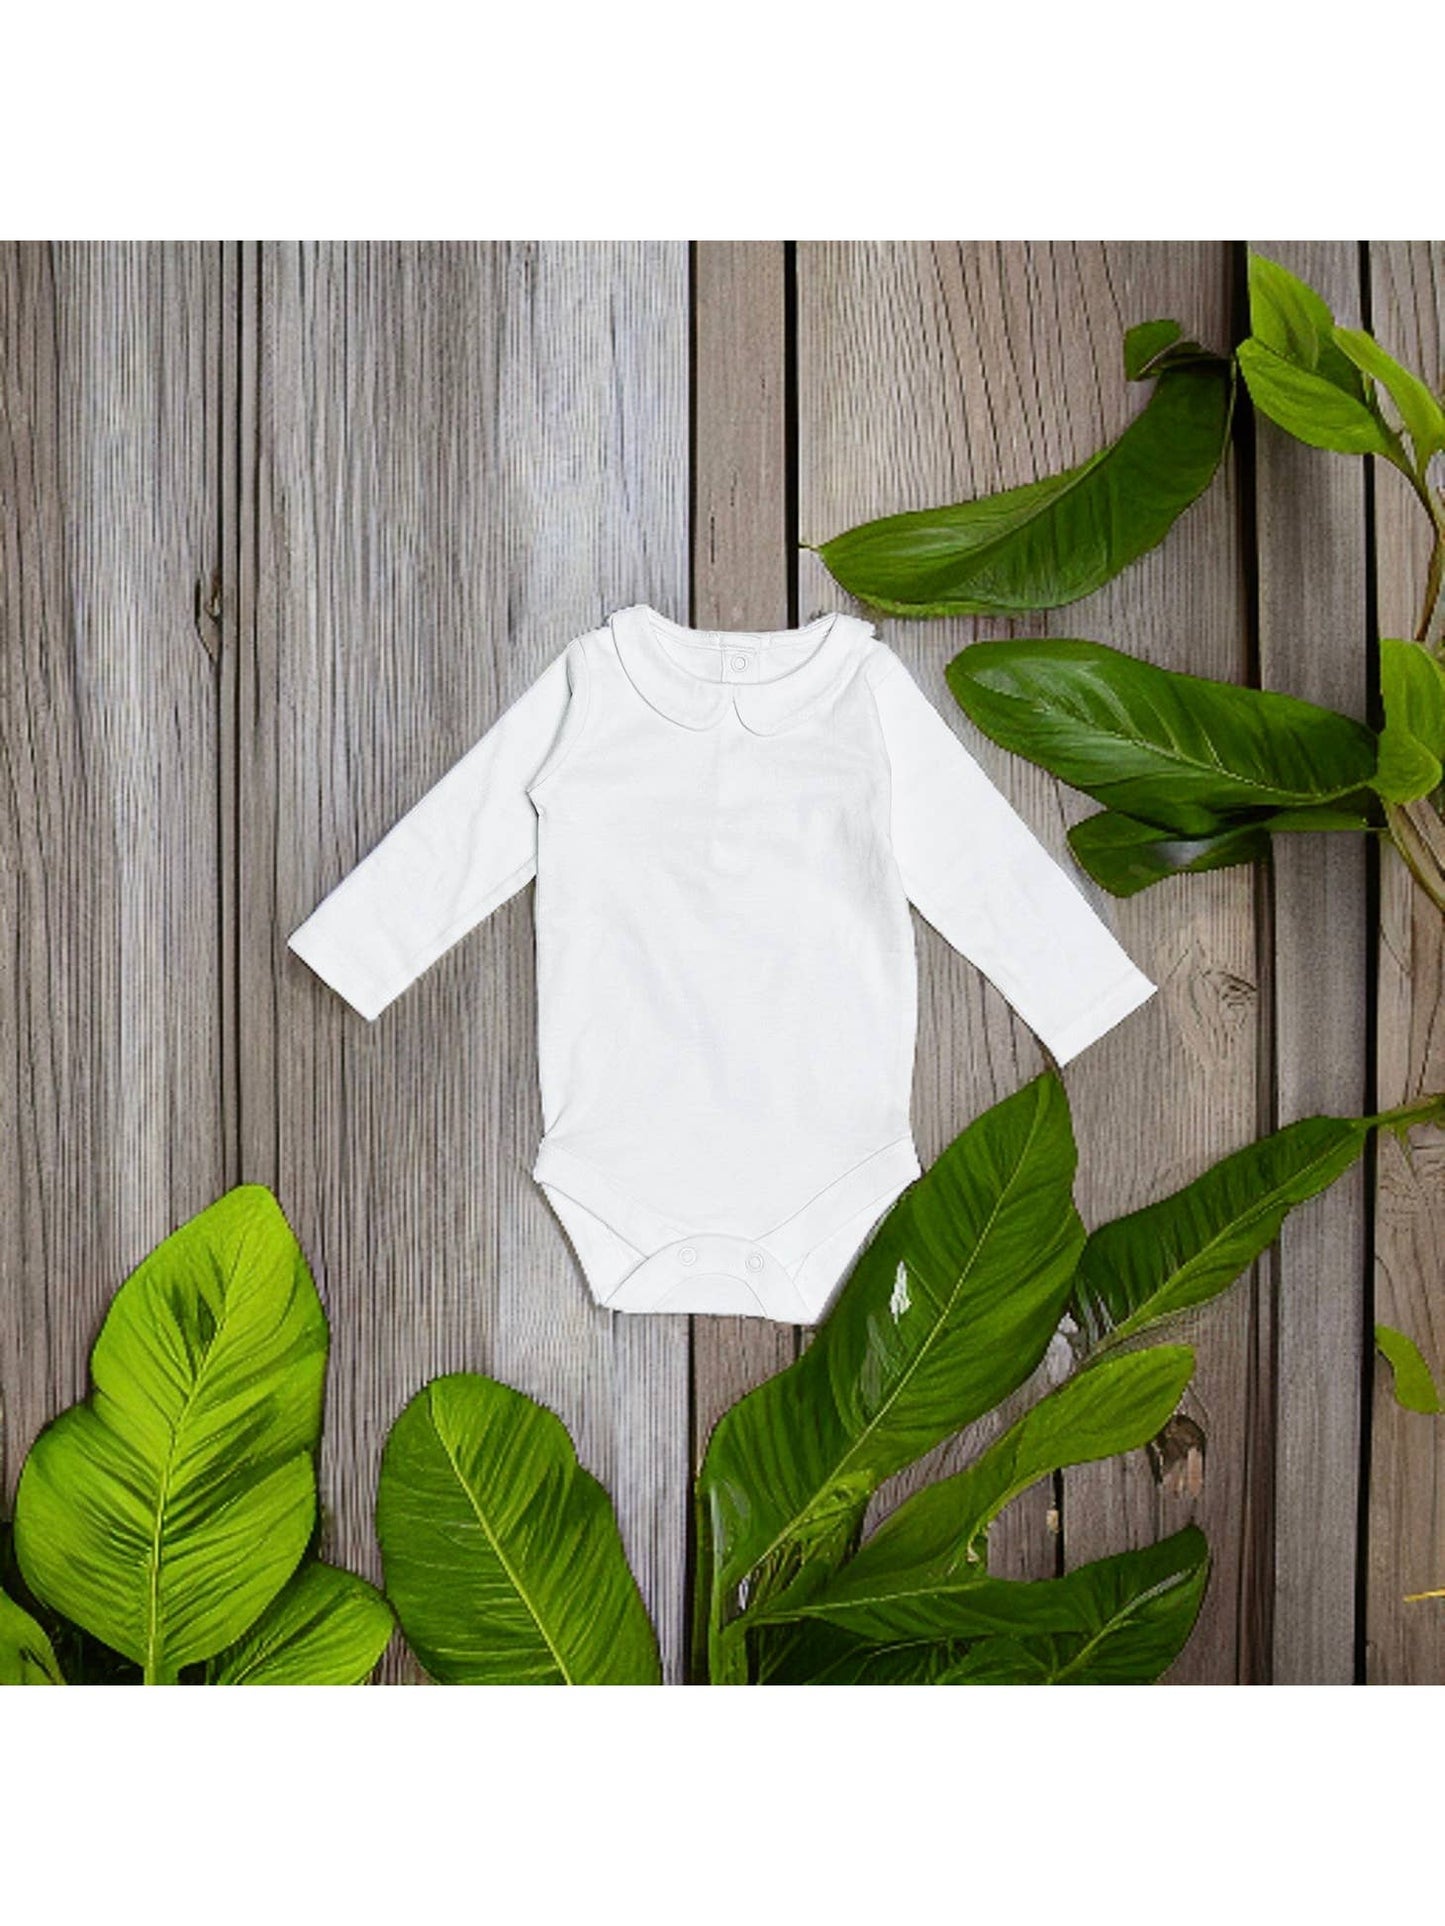 White Long Sleeve Peter Pan Baby Bodysuit